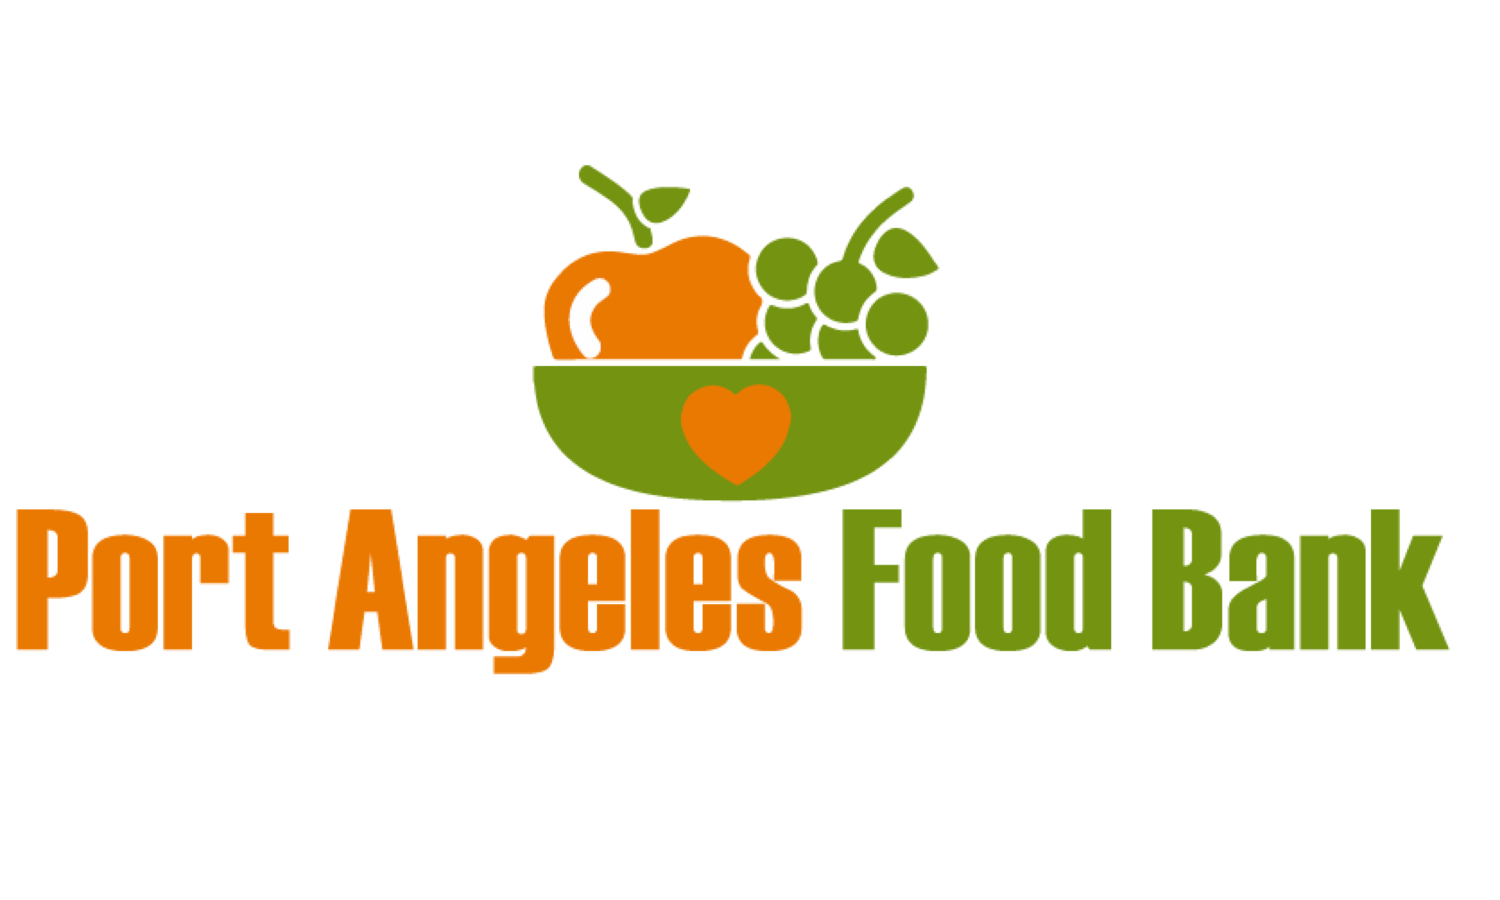 Port Angeles Food Bank logo